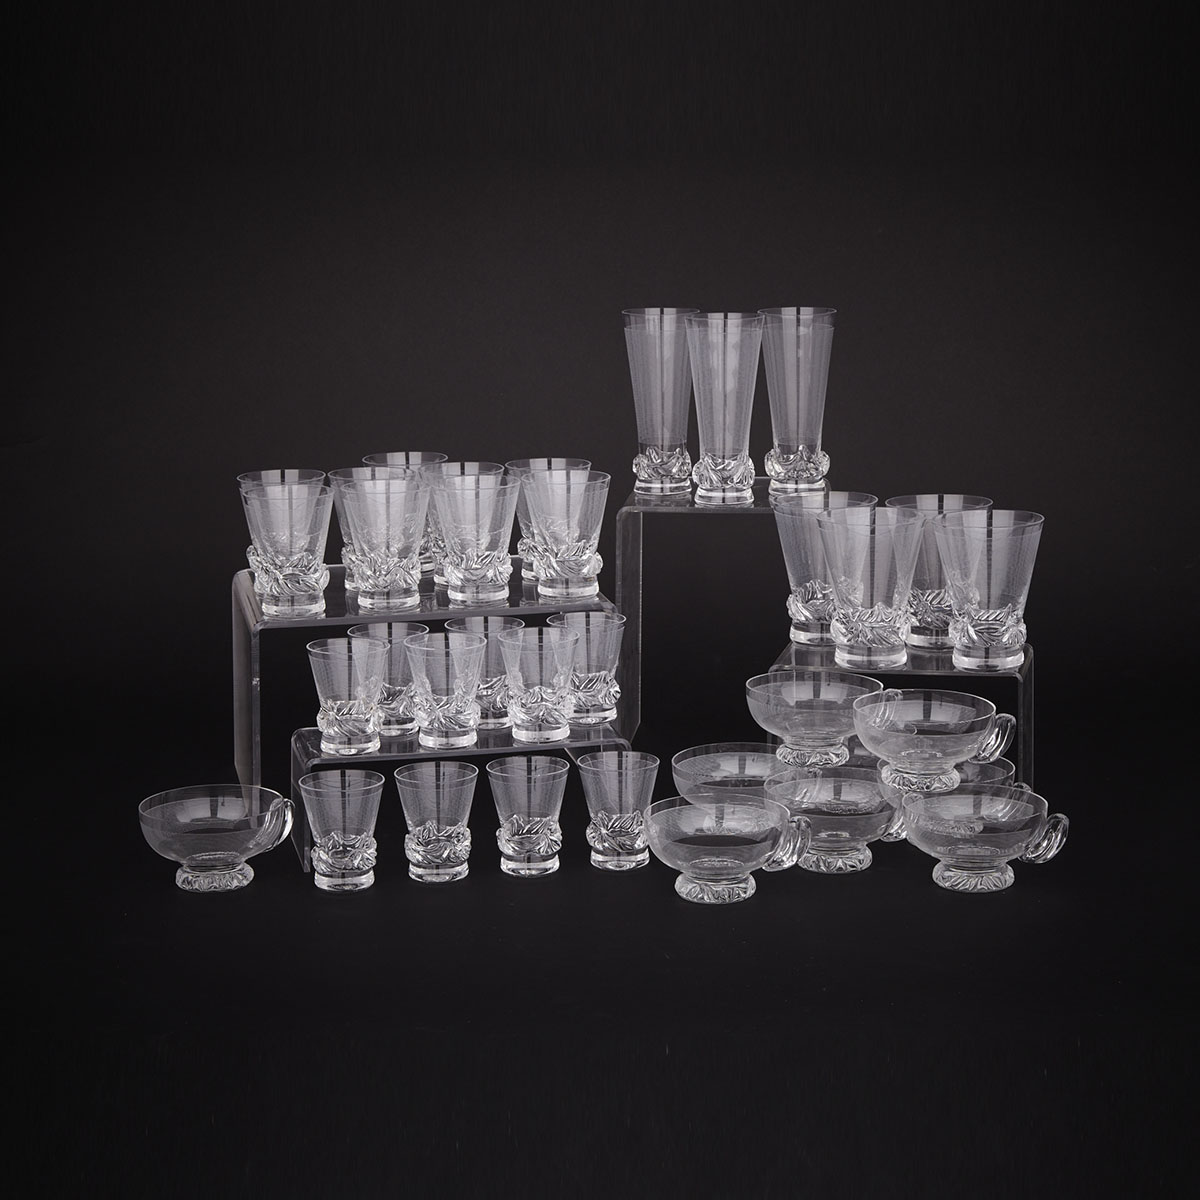 Daum ‘Sorcy’ Pattern Glassware, 20th century